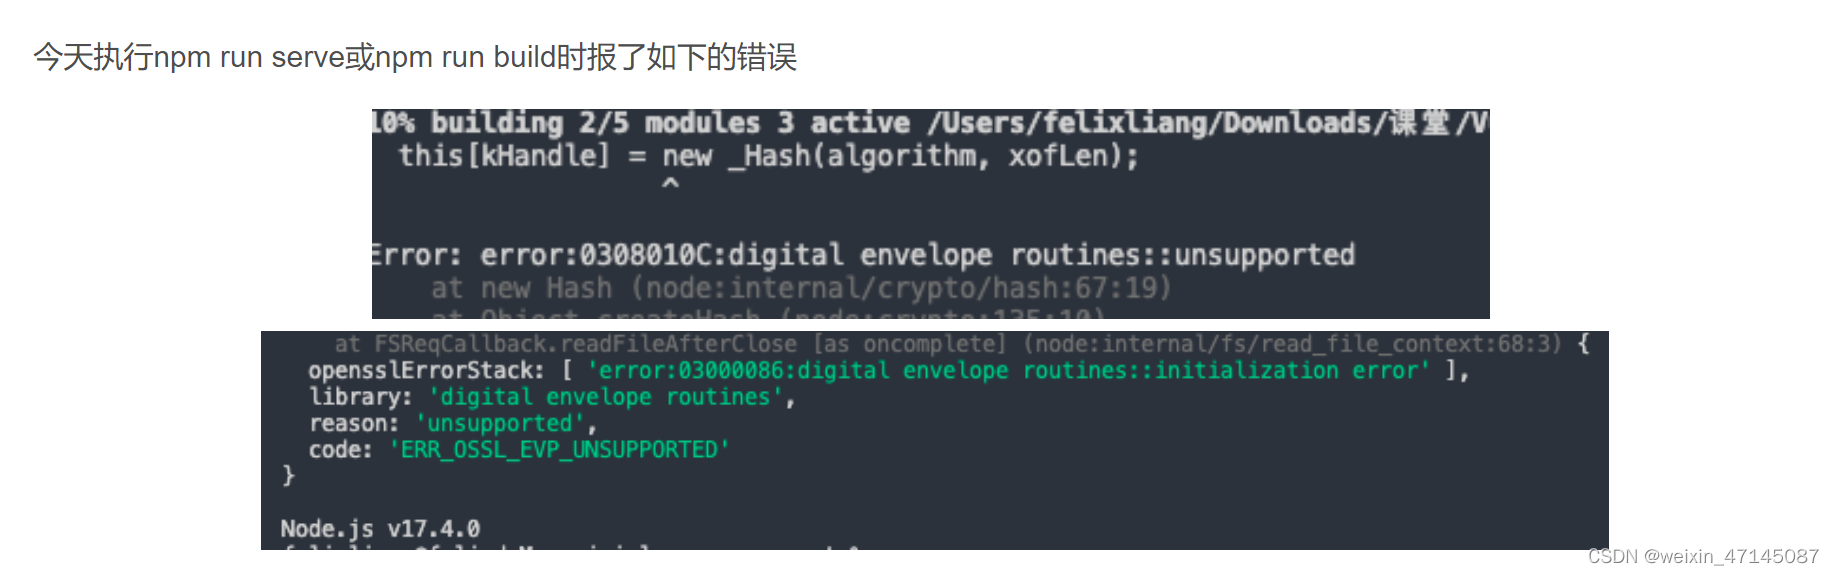 问题：Opensslerrorstack: [ 'Error:03000086:Digital Envelope  Routines::Initialization Error' ]已解决_Weixin_47145087的博客-Csdn博客